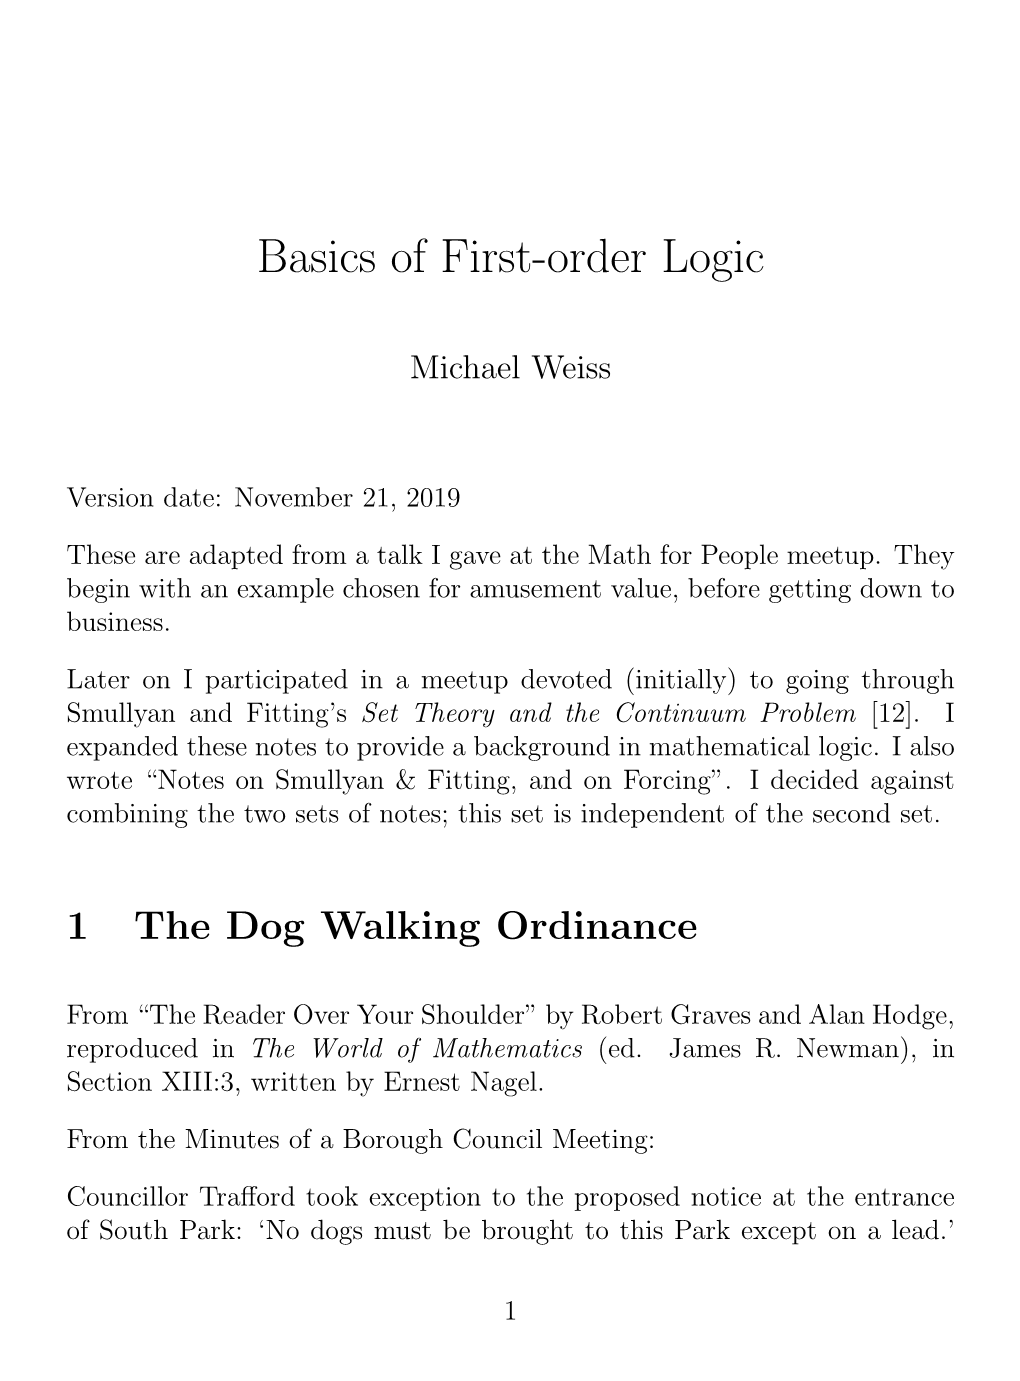 Basics of First-Order Logic